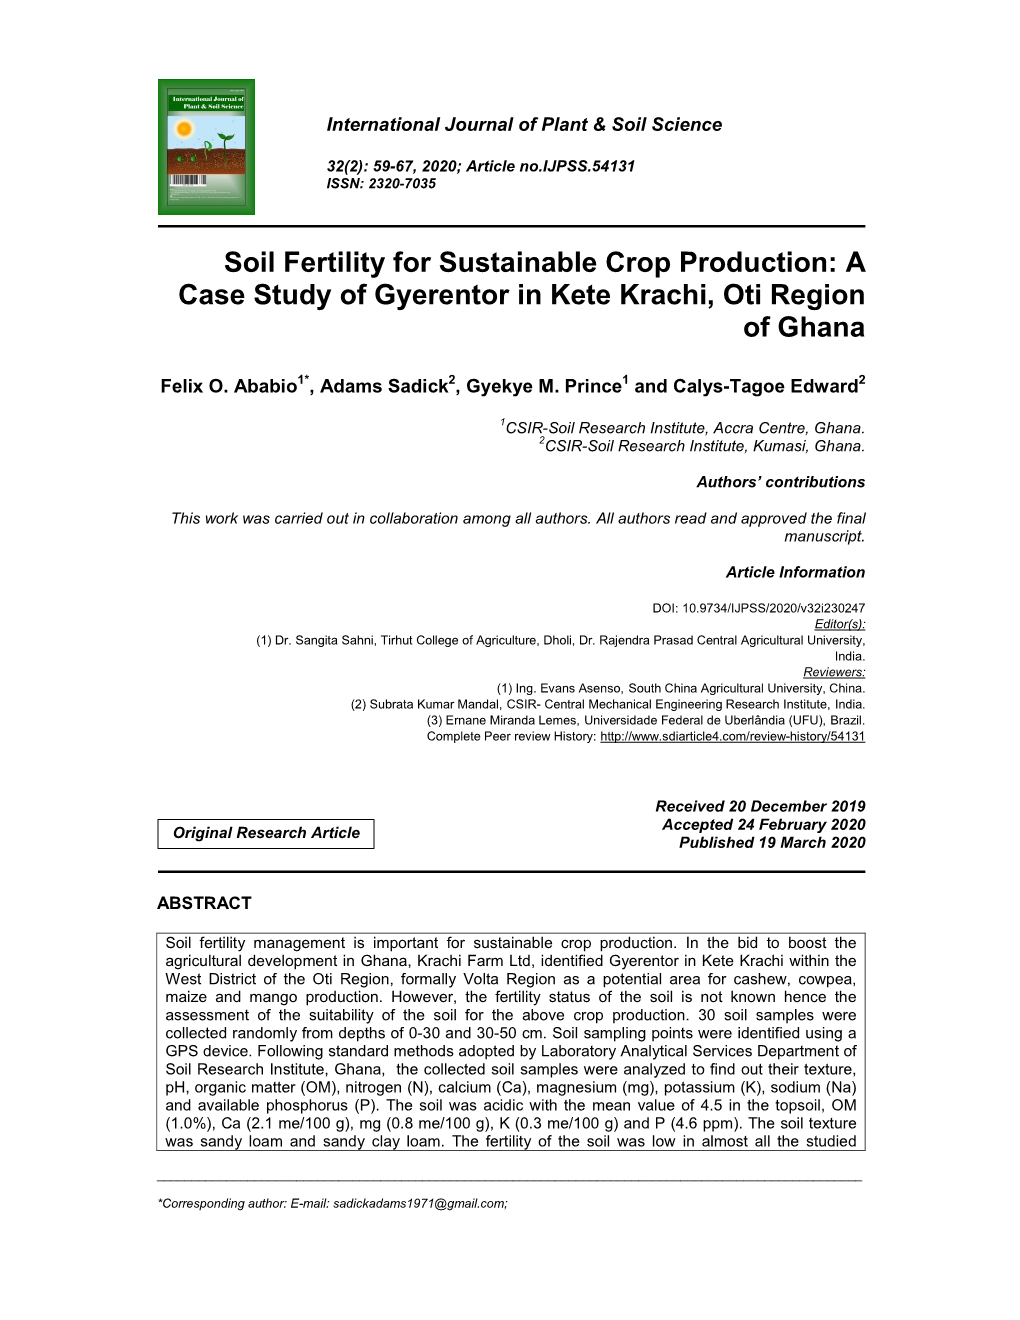 Soil Fertility for Sustainable Crop Production: a Case Study of Gyerentor in Kete Krachi, Oti Region of Ghana